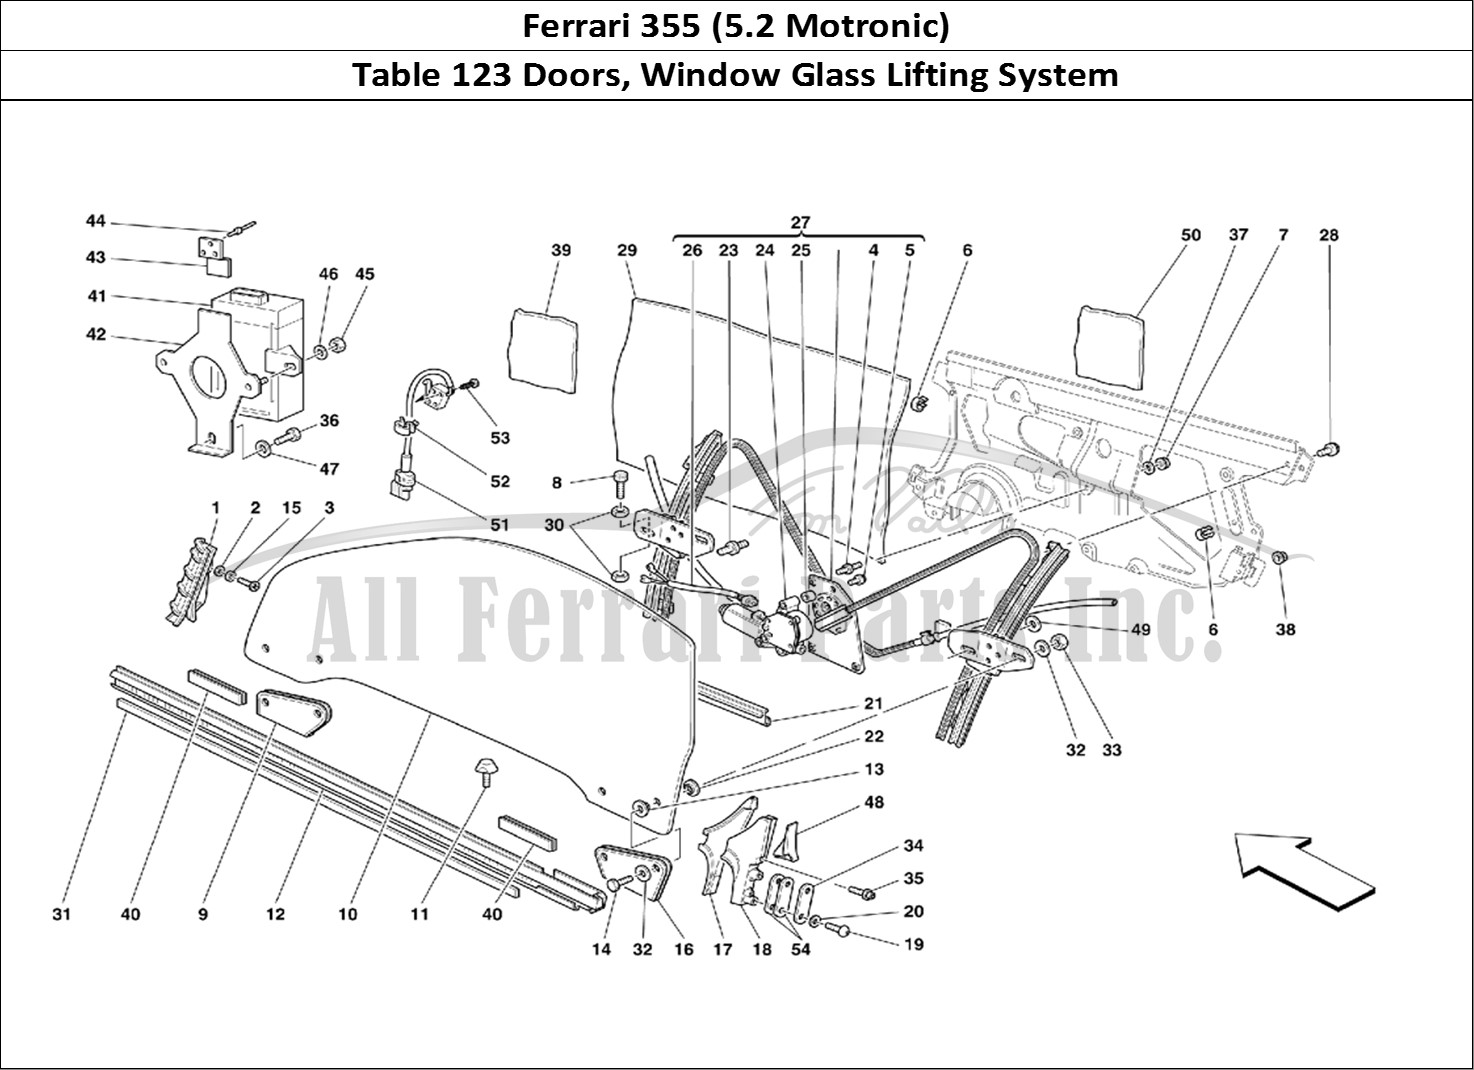 Ferrari Parts Ferrari 355 (5.2 Motronic) Page 123 Doors - Glass Lifting Dev